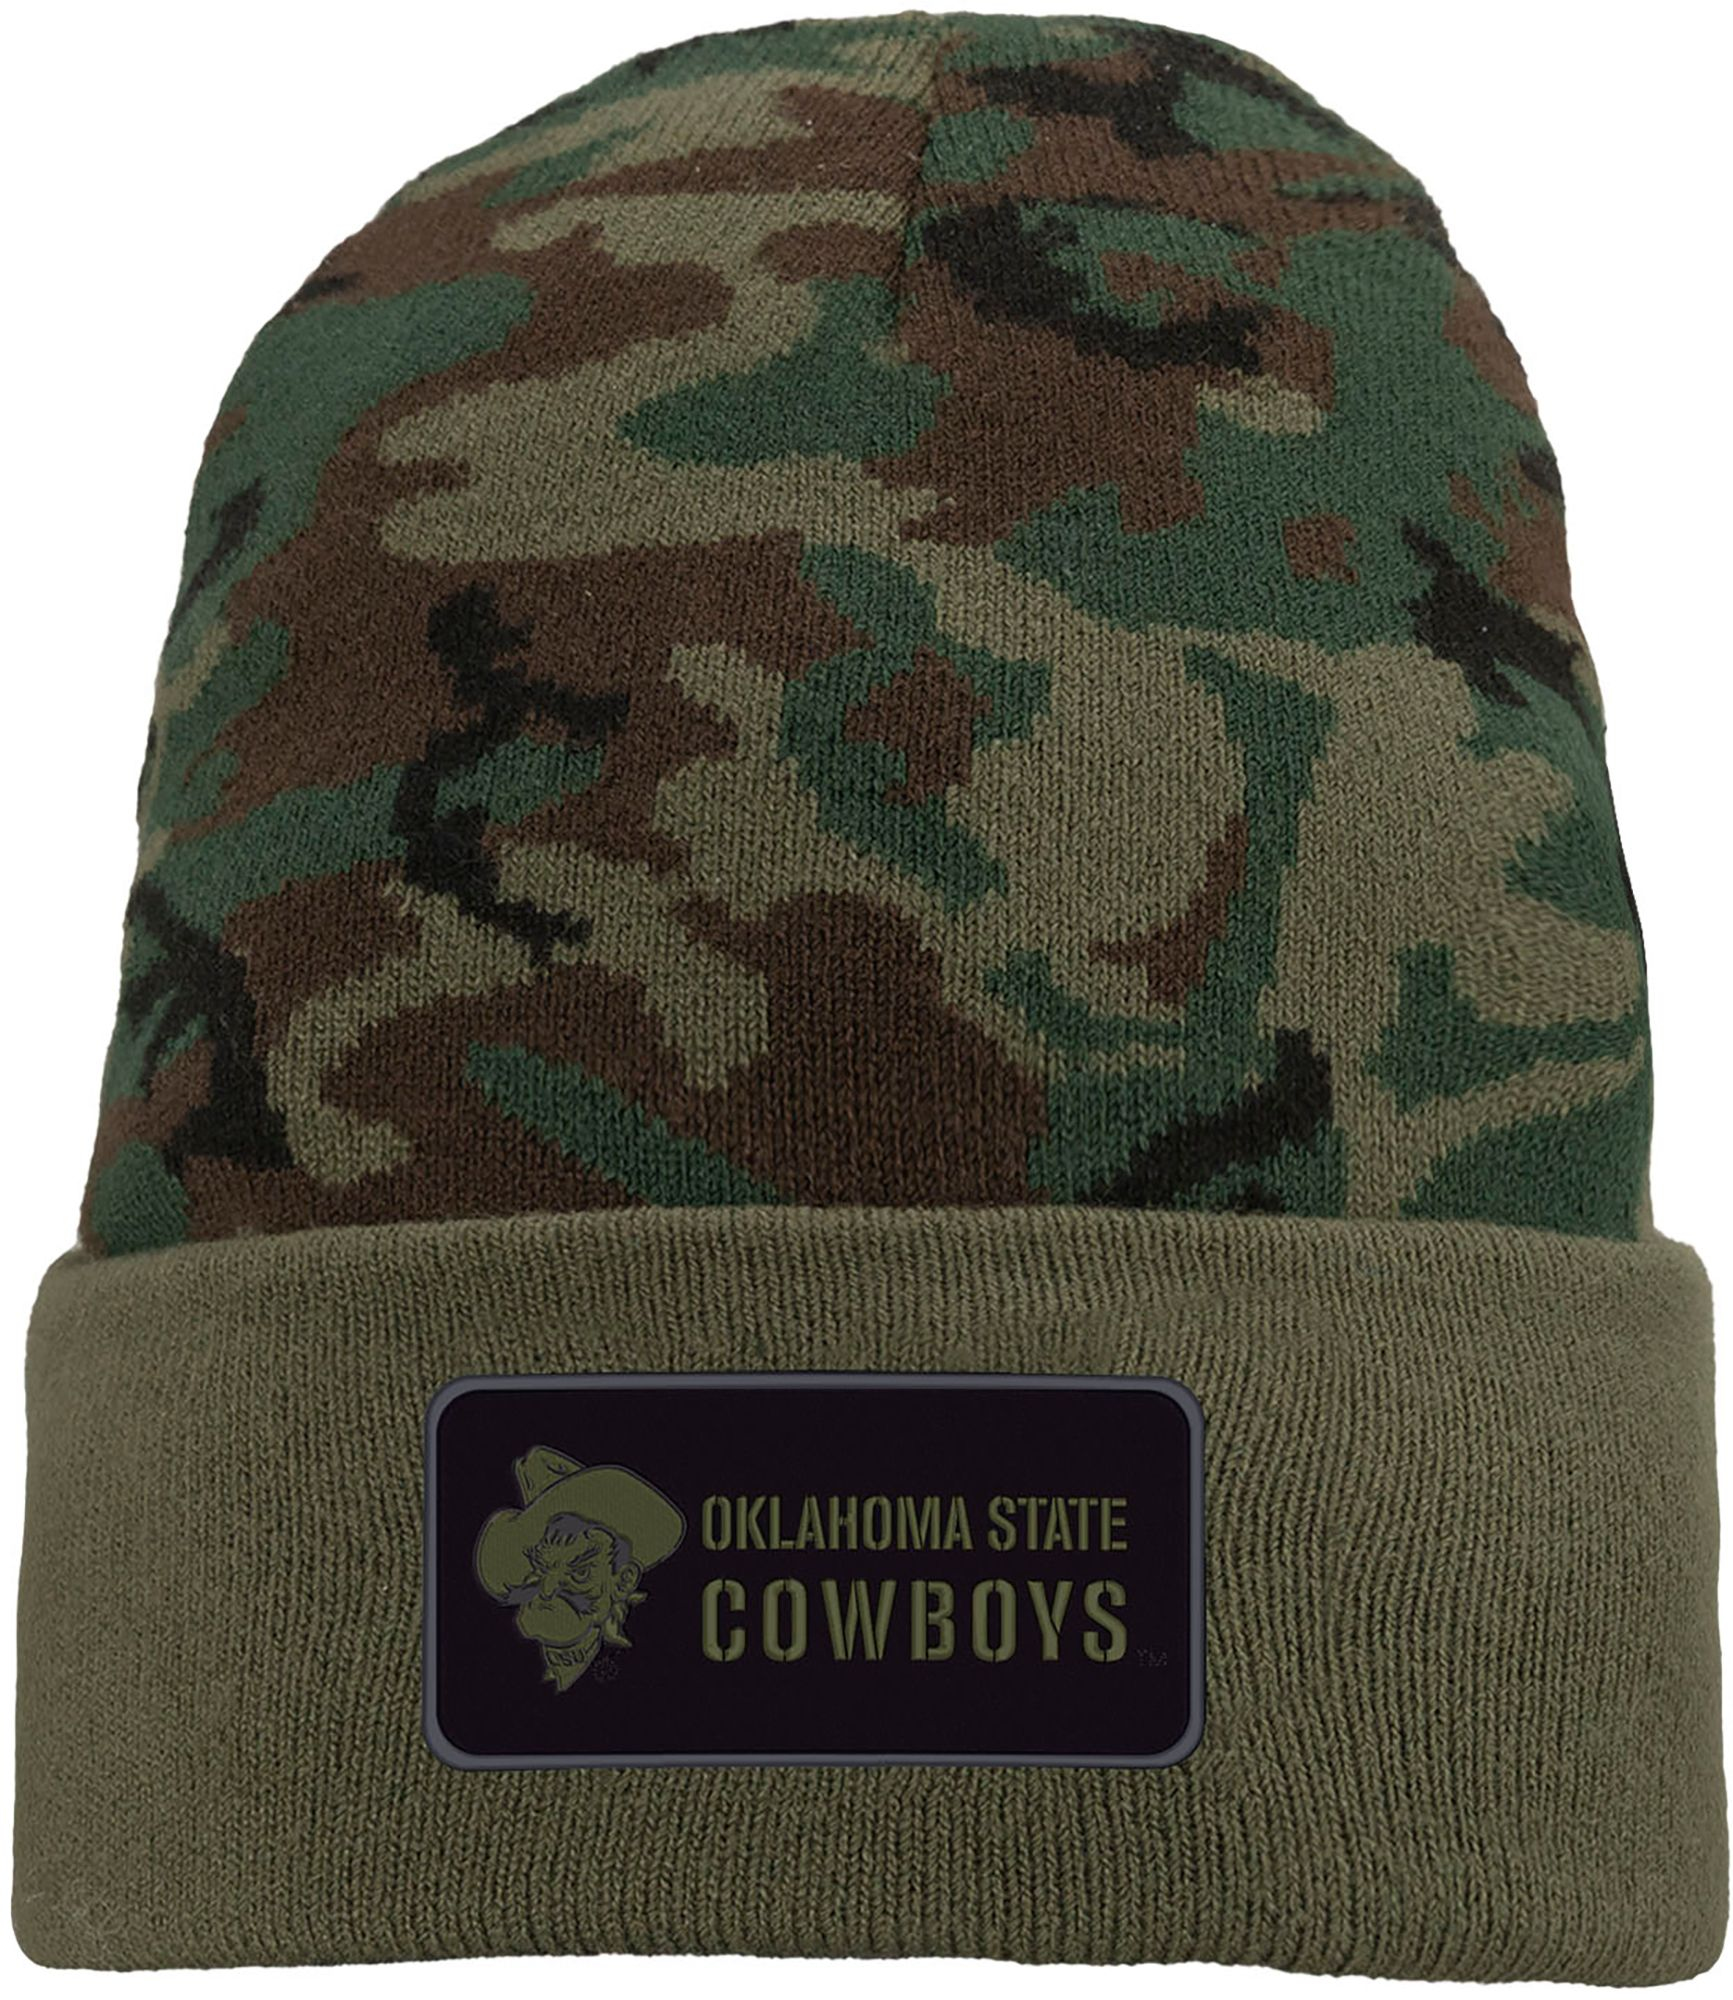 Nike Men's Oklahoma State Cowboys Camo Military Knit Hat, Green